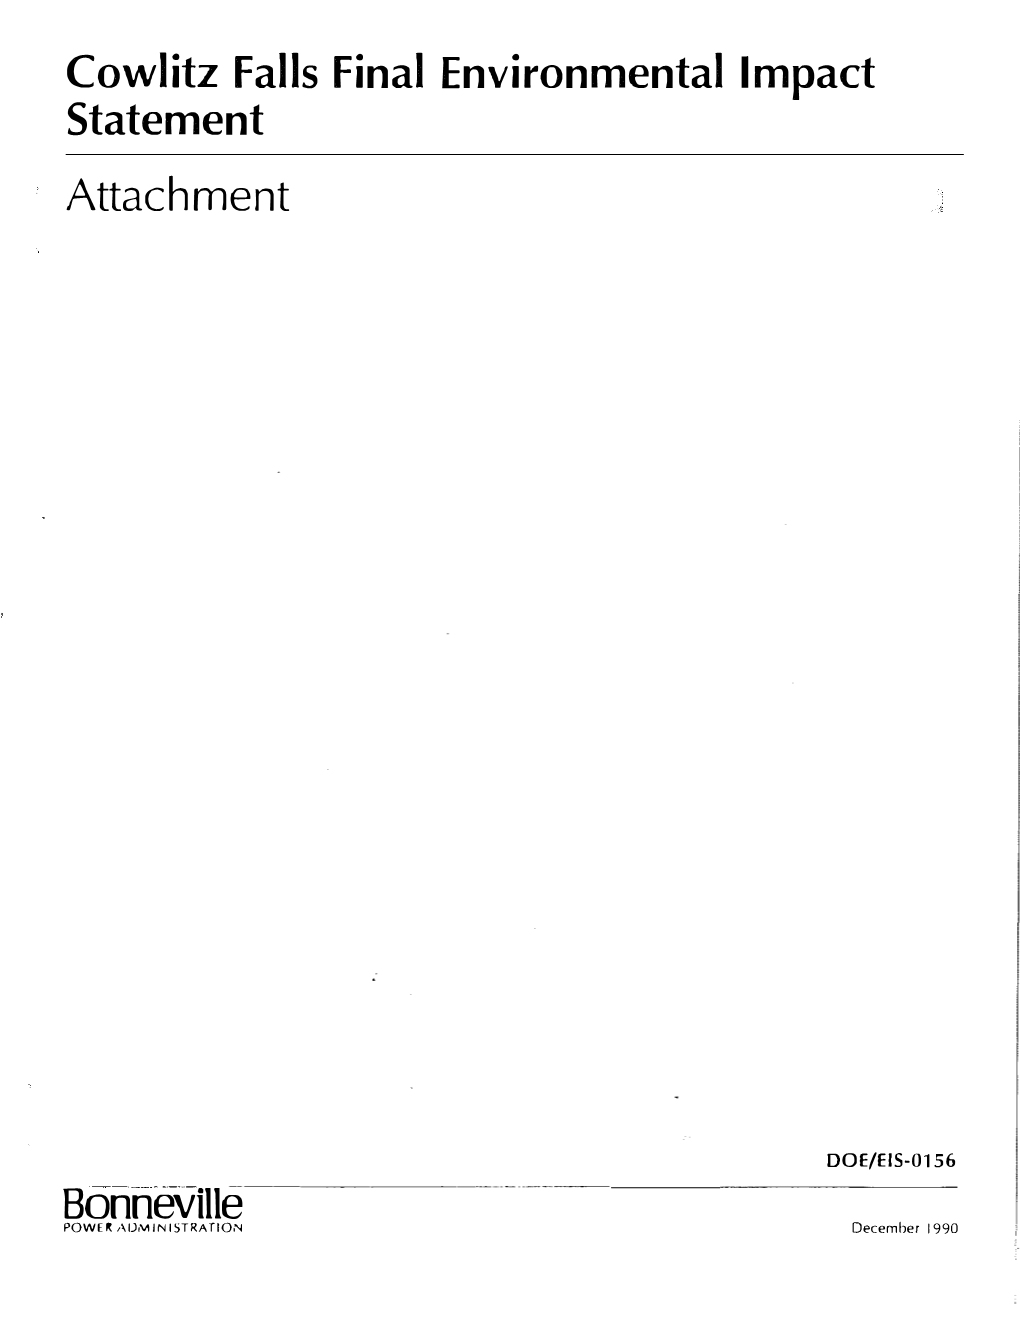 Cowlitz Falls Final Environmental Impact Statement Attachment